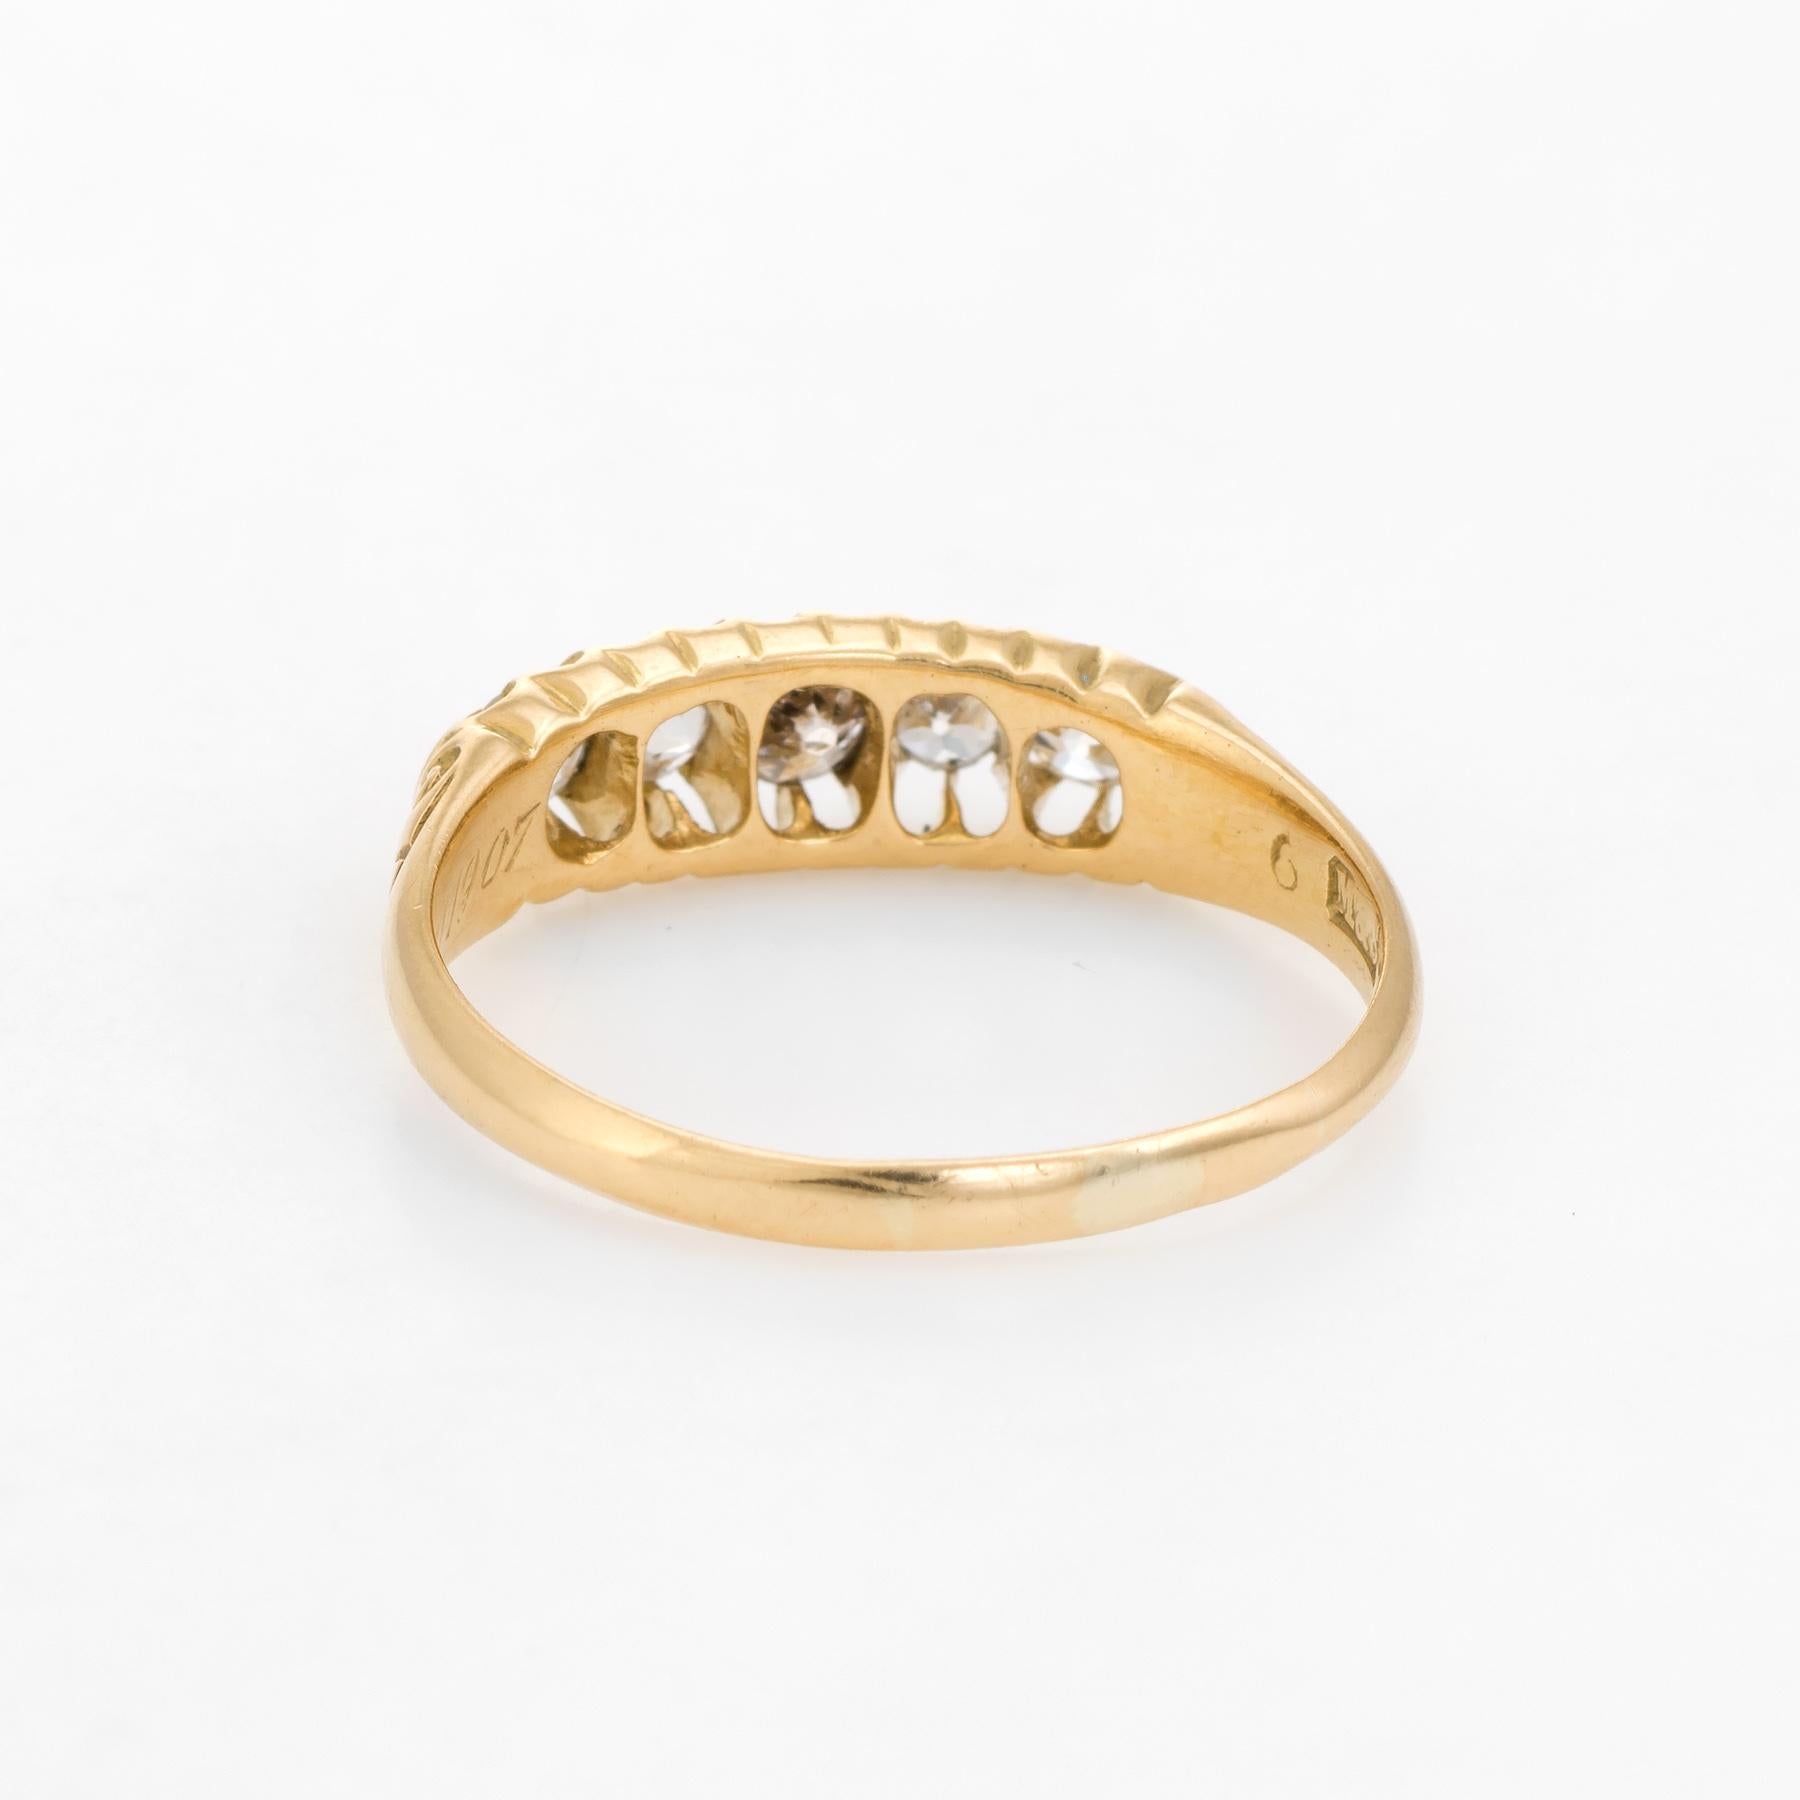 Graduated 5 Old Mine Cut Diamond Ring Antique Edwardian circa 1907 18 Karat Gold 1